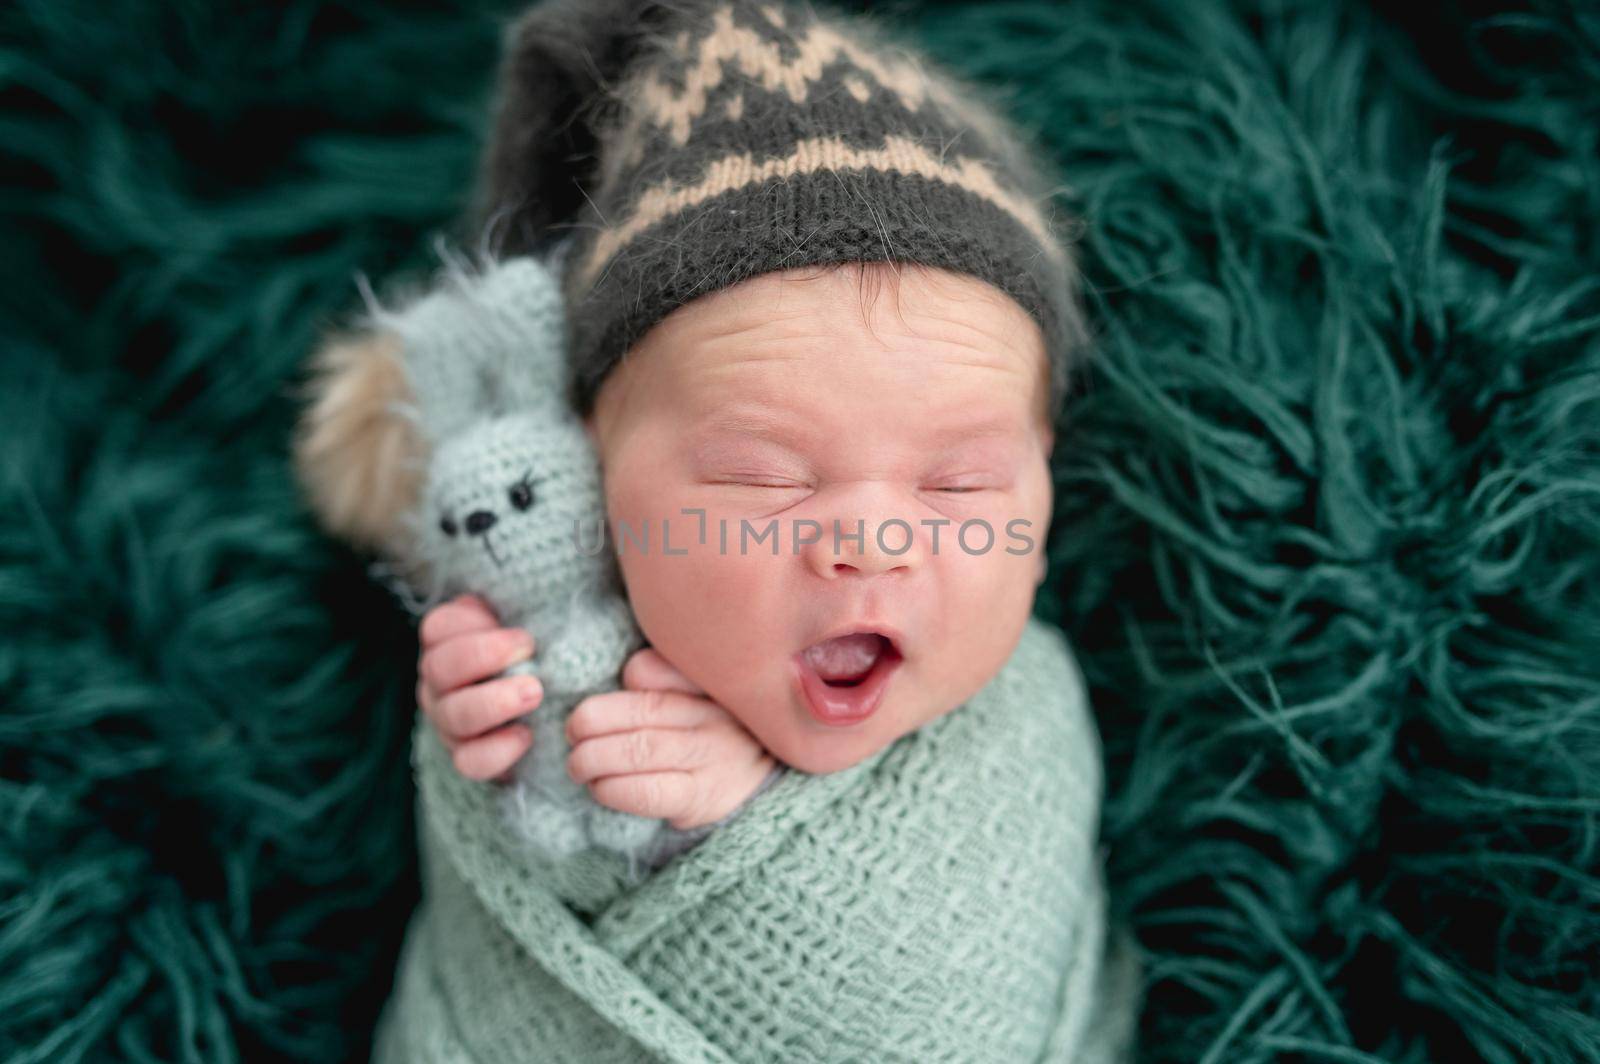 Funny face of newborn by tan4ikk1